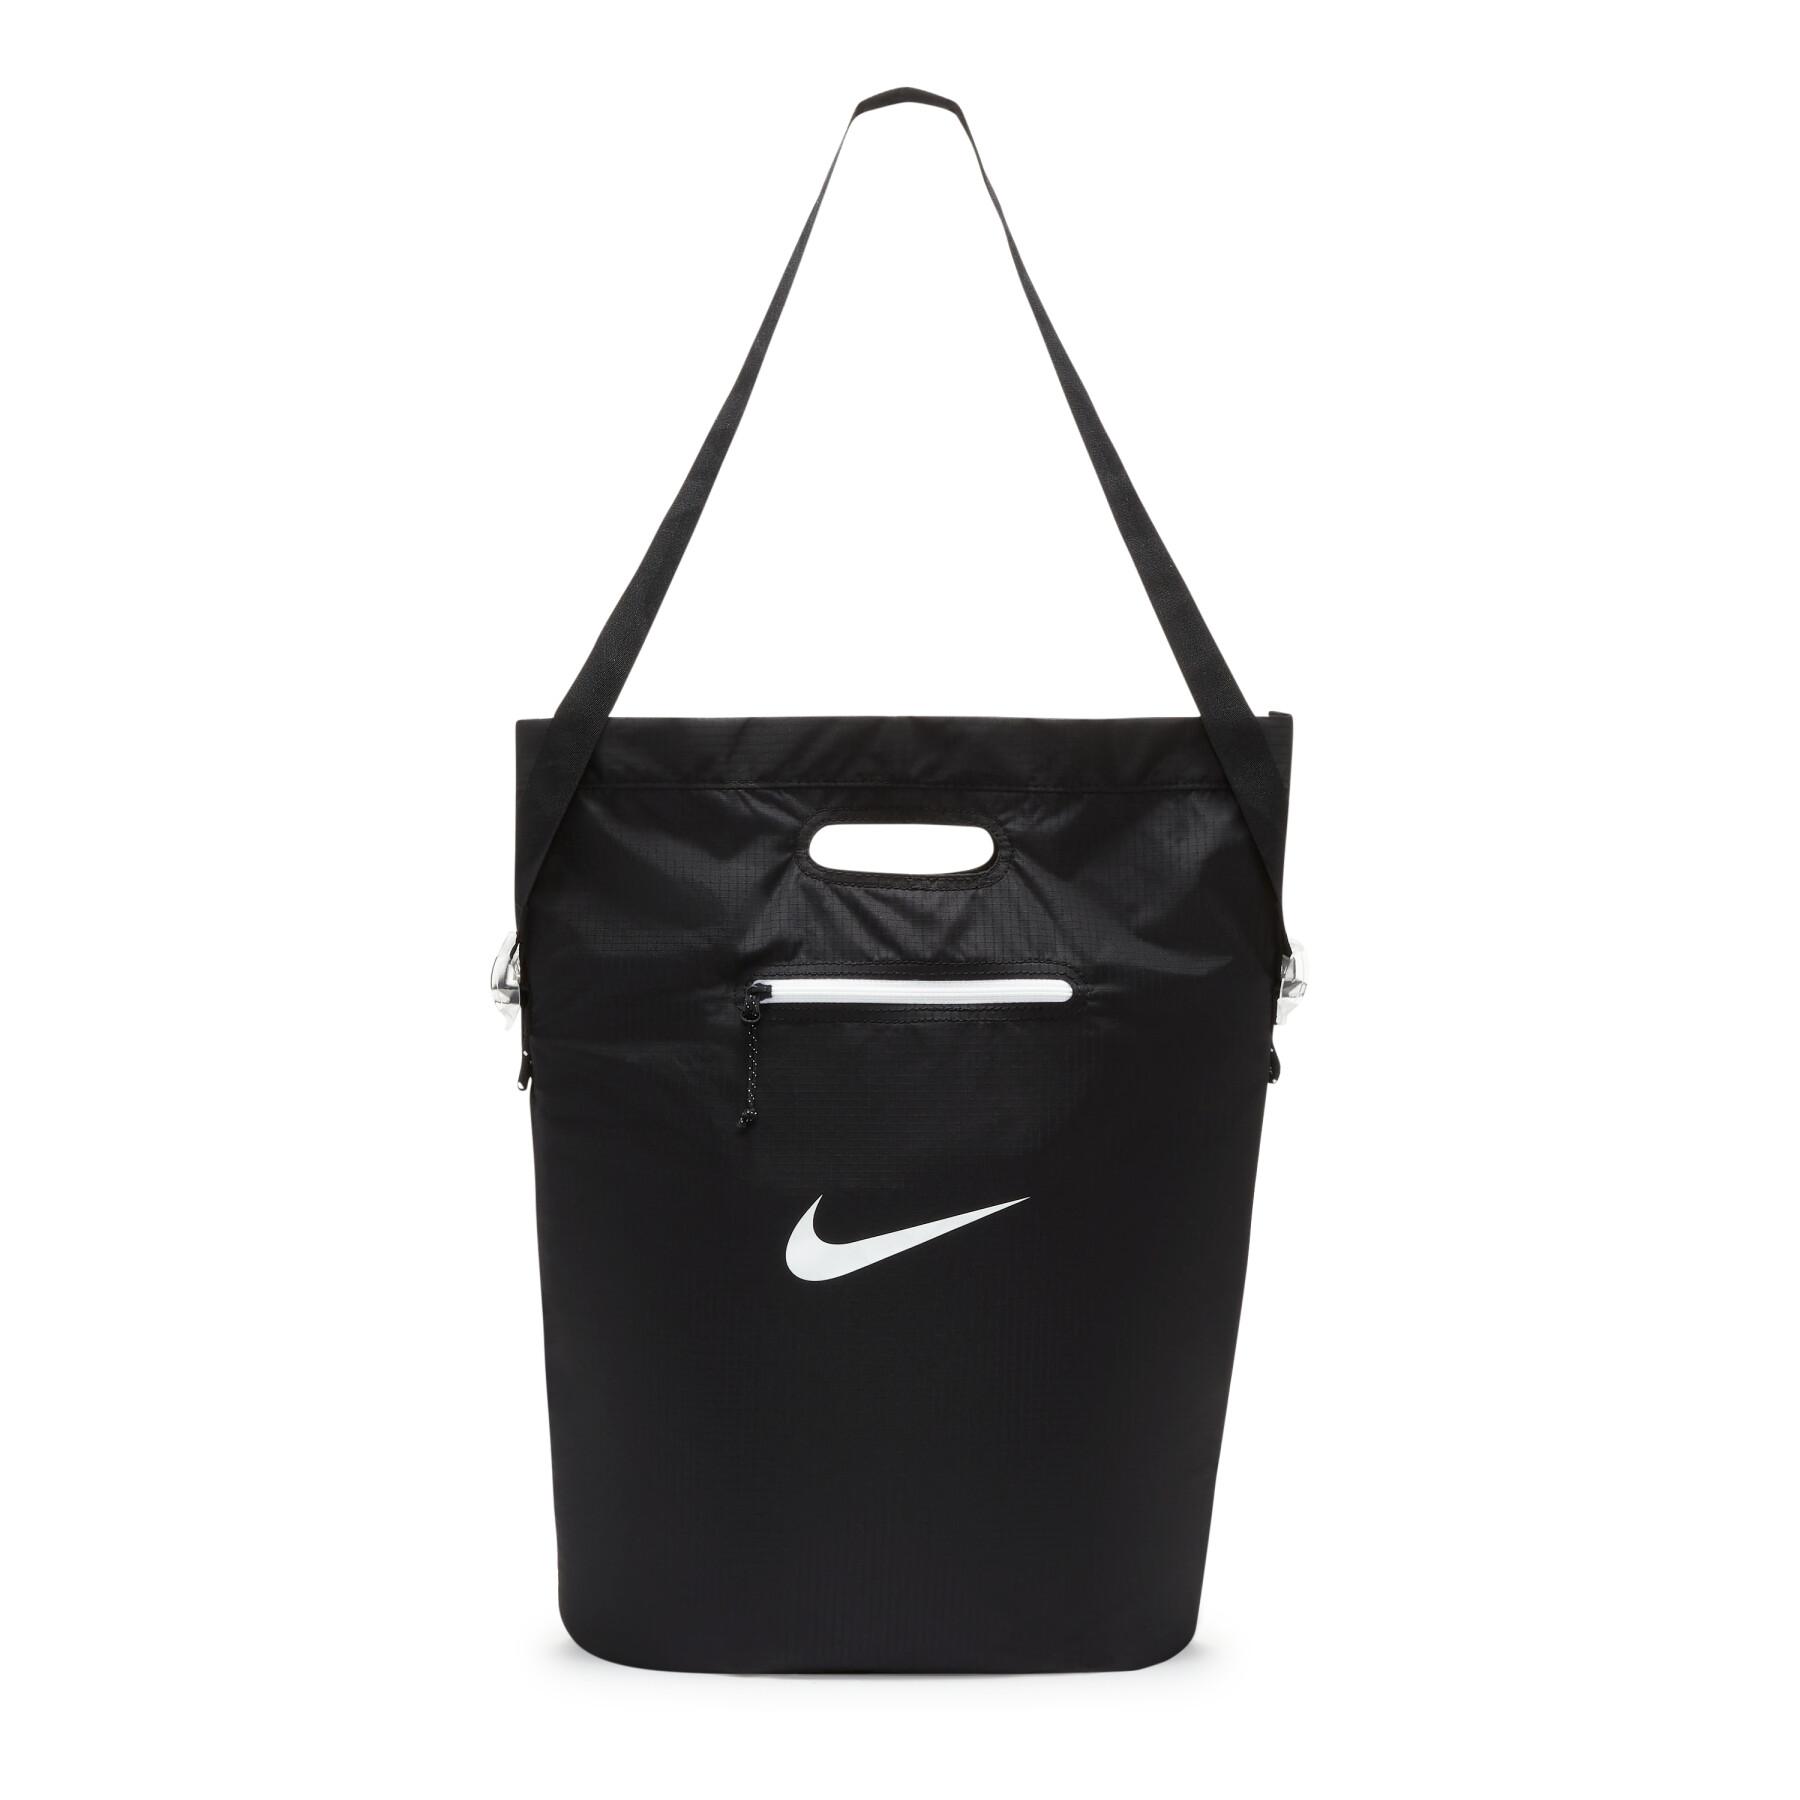 Bärbar väska Nike Stash